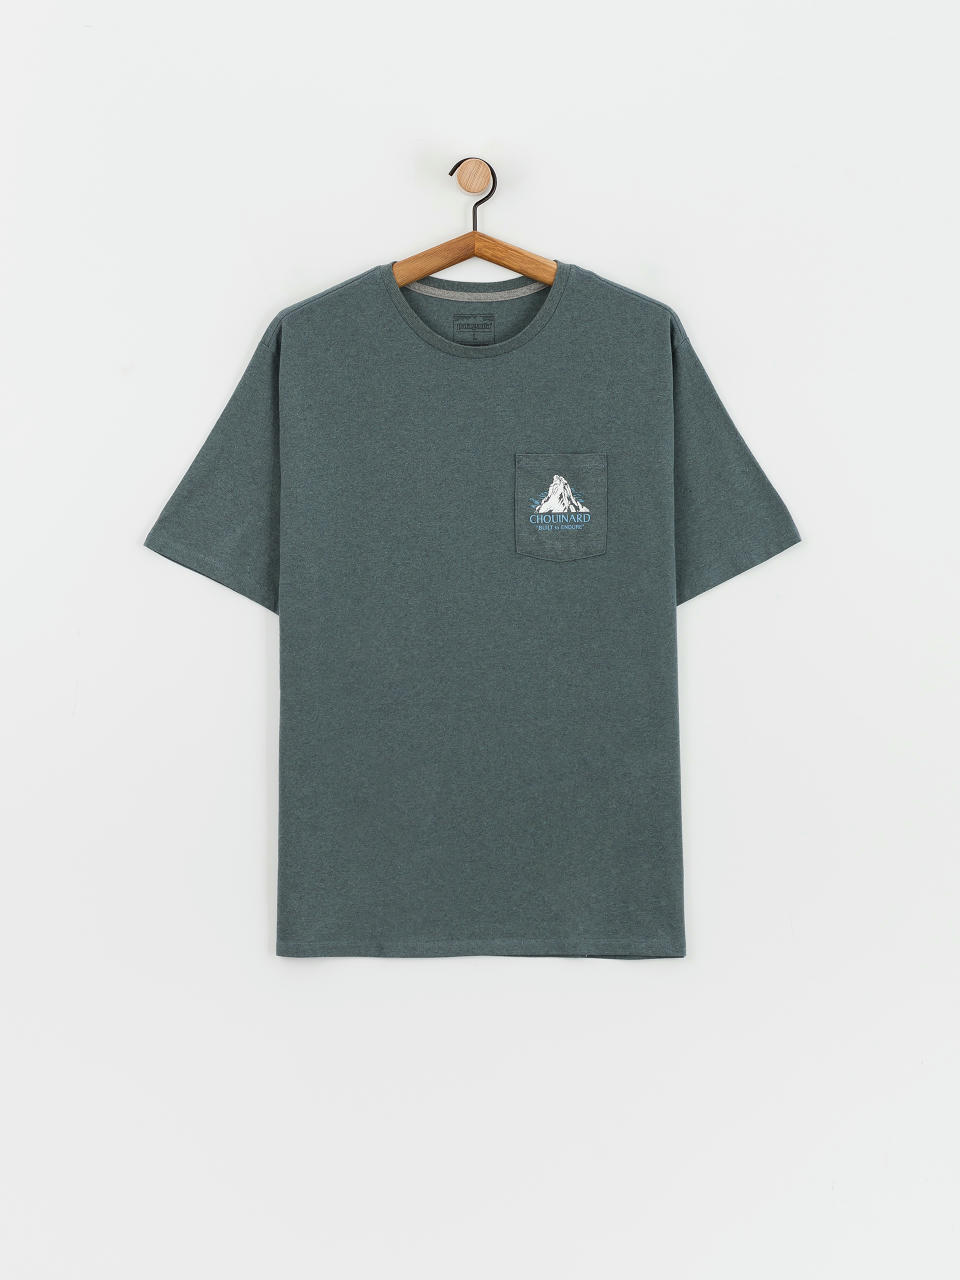 Patagonia Chouinard Crest Pocket Responsibili T-Shirt (nouveau green)